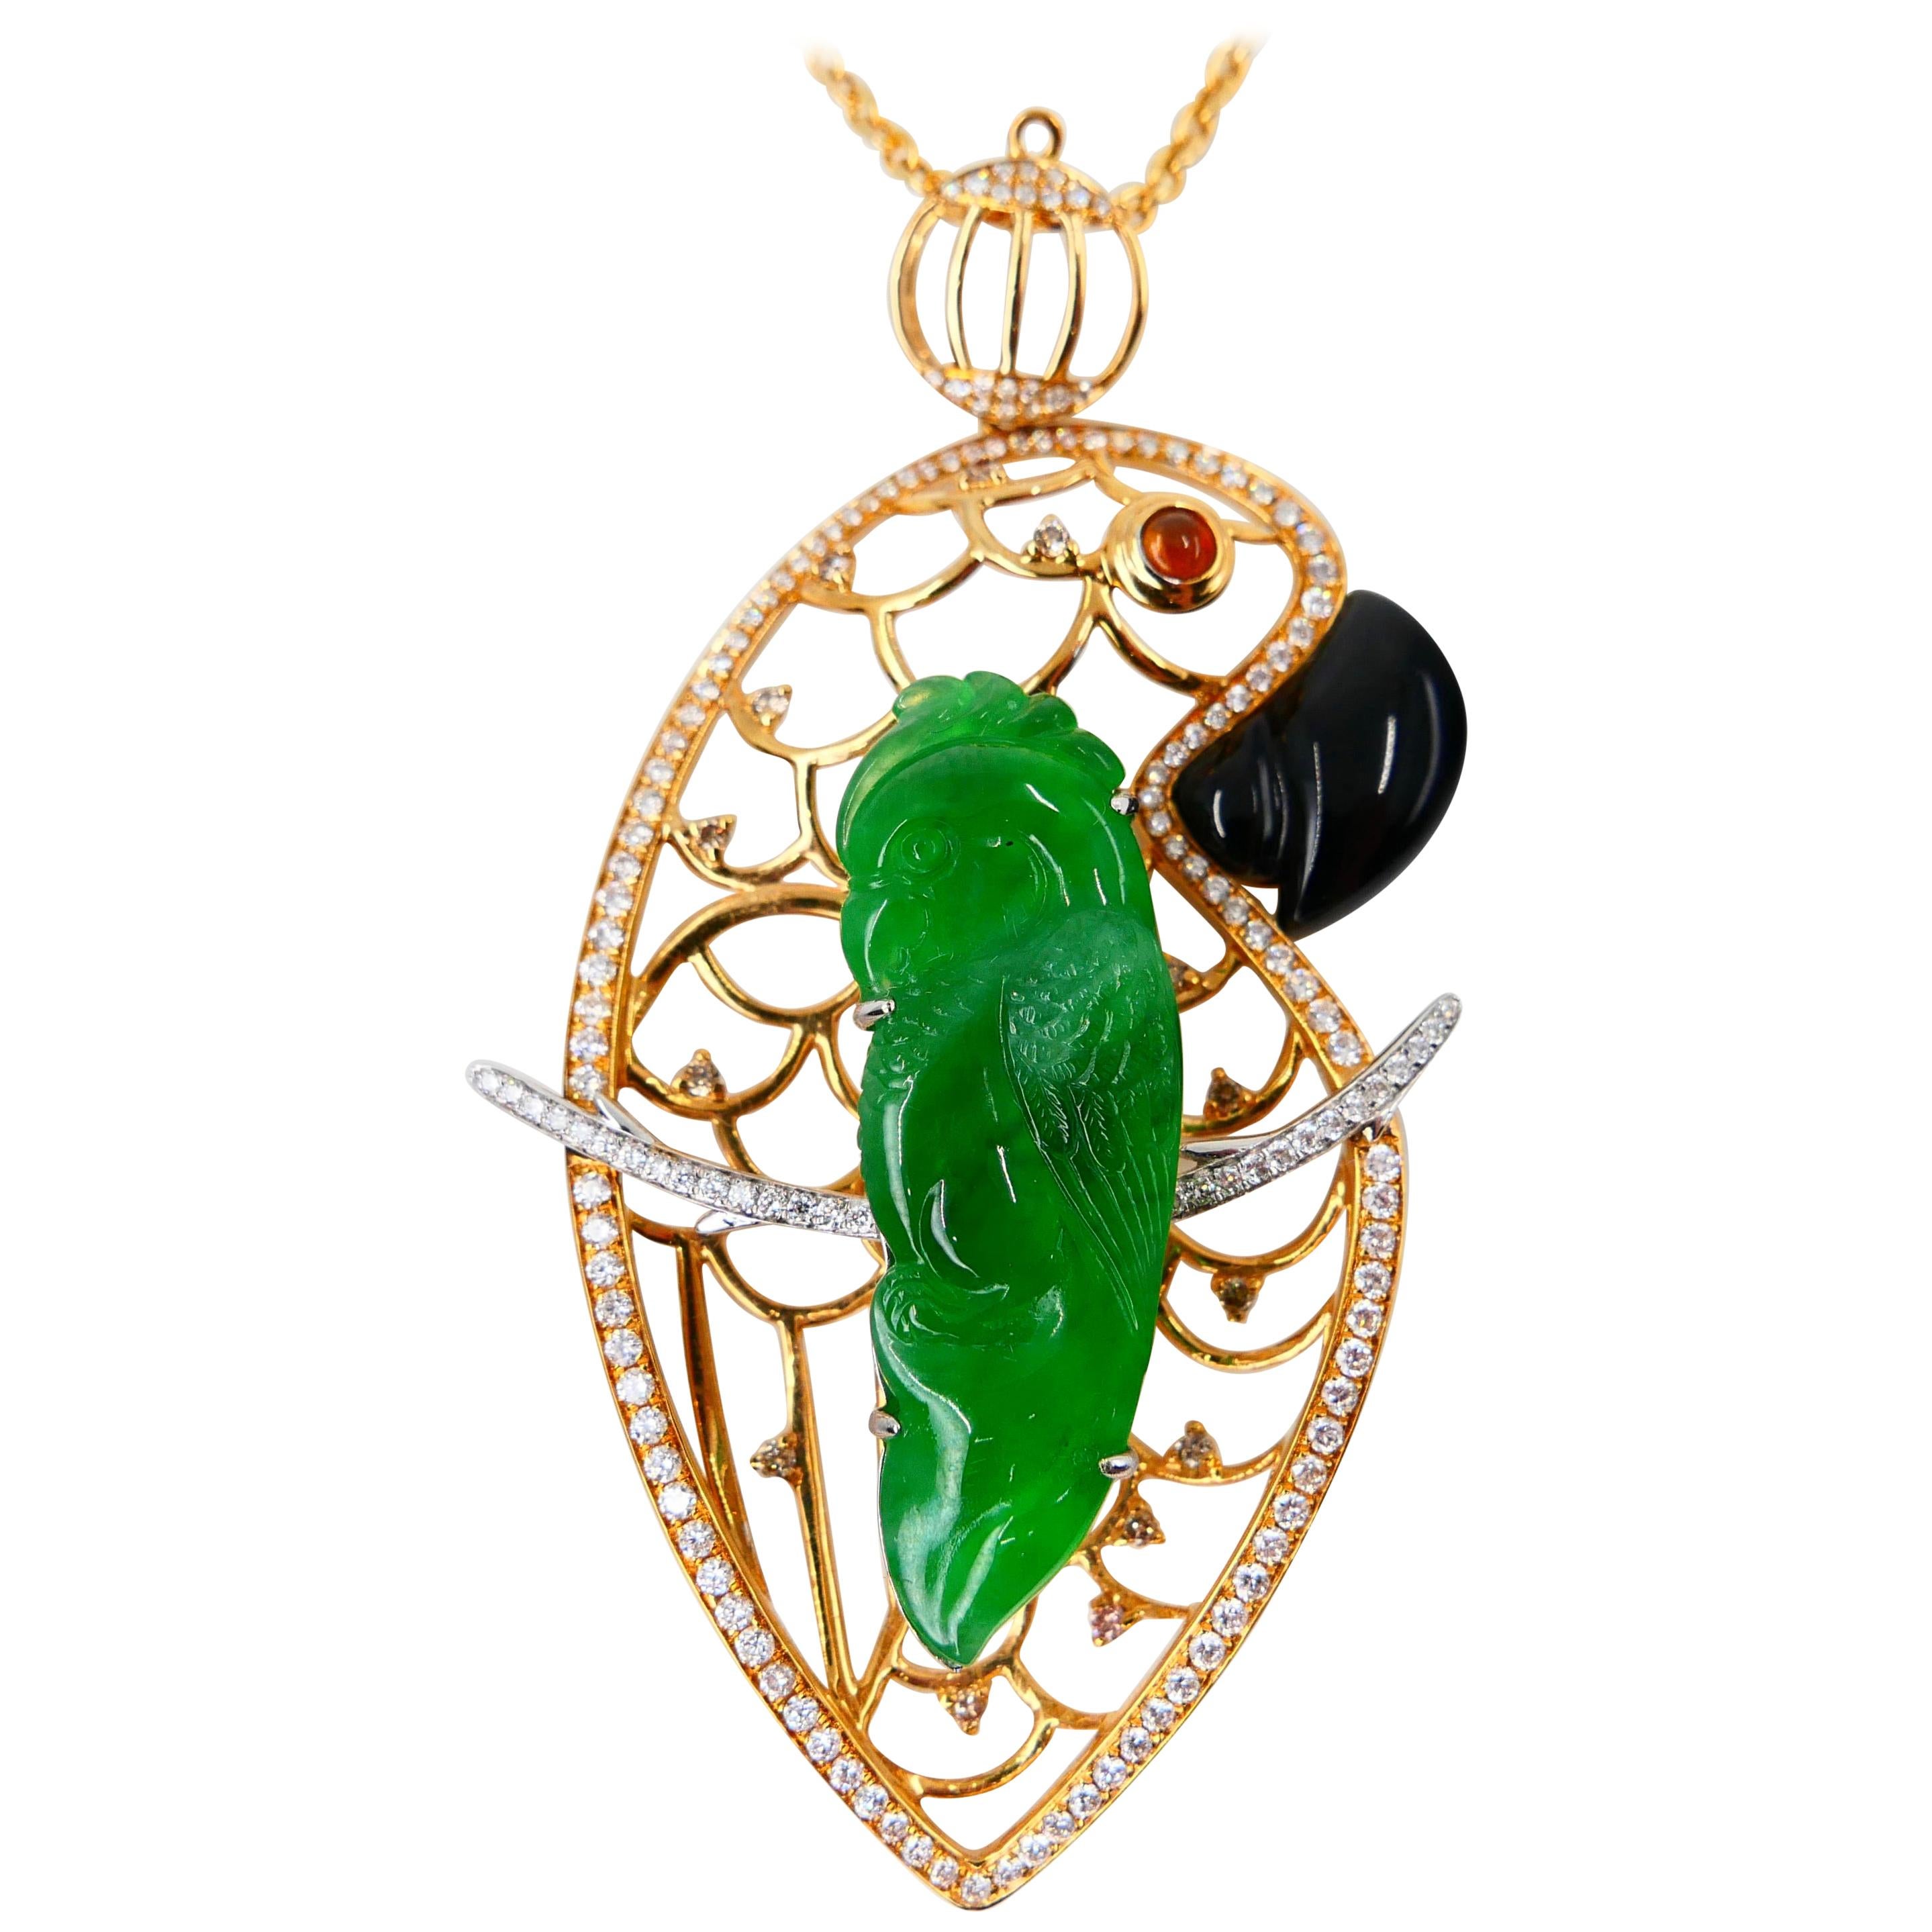 Certified Type A Jadeite Jade and Diamond Parrot Pendant, Vivid Green Color